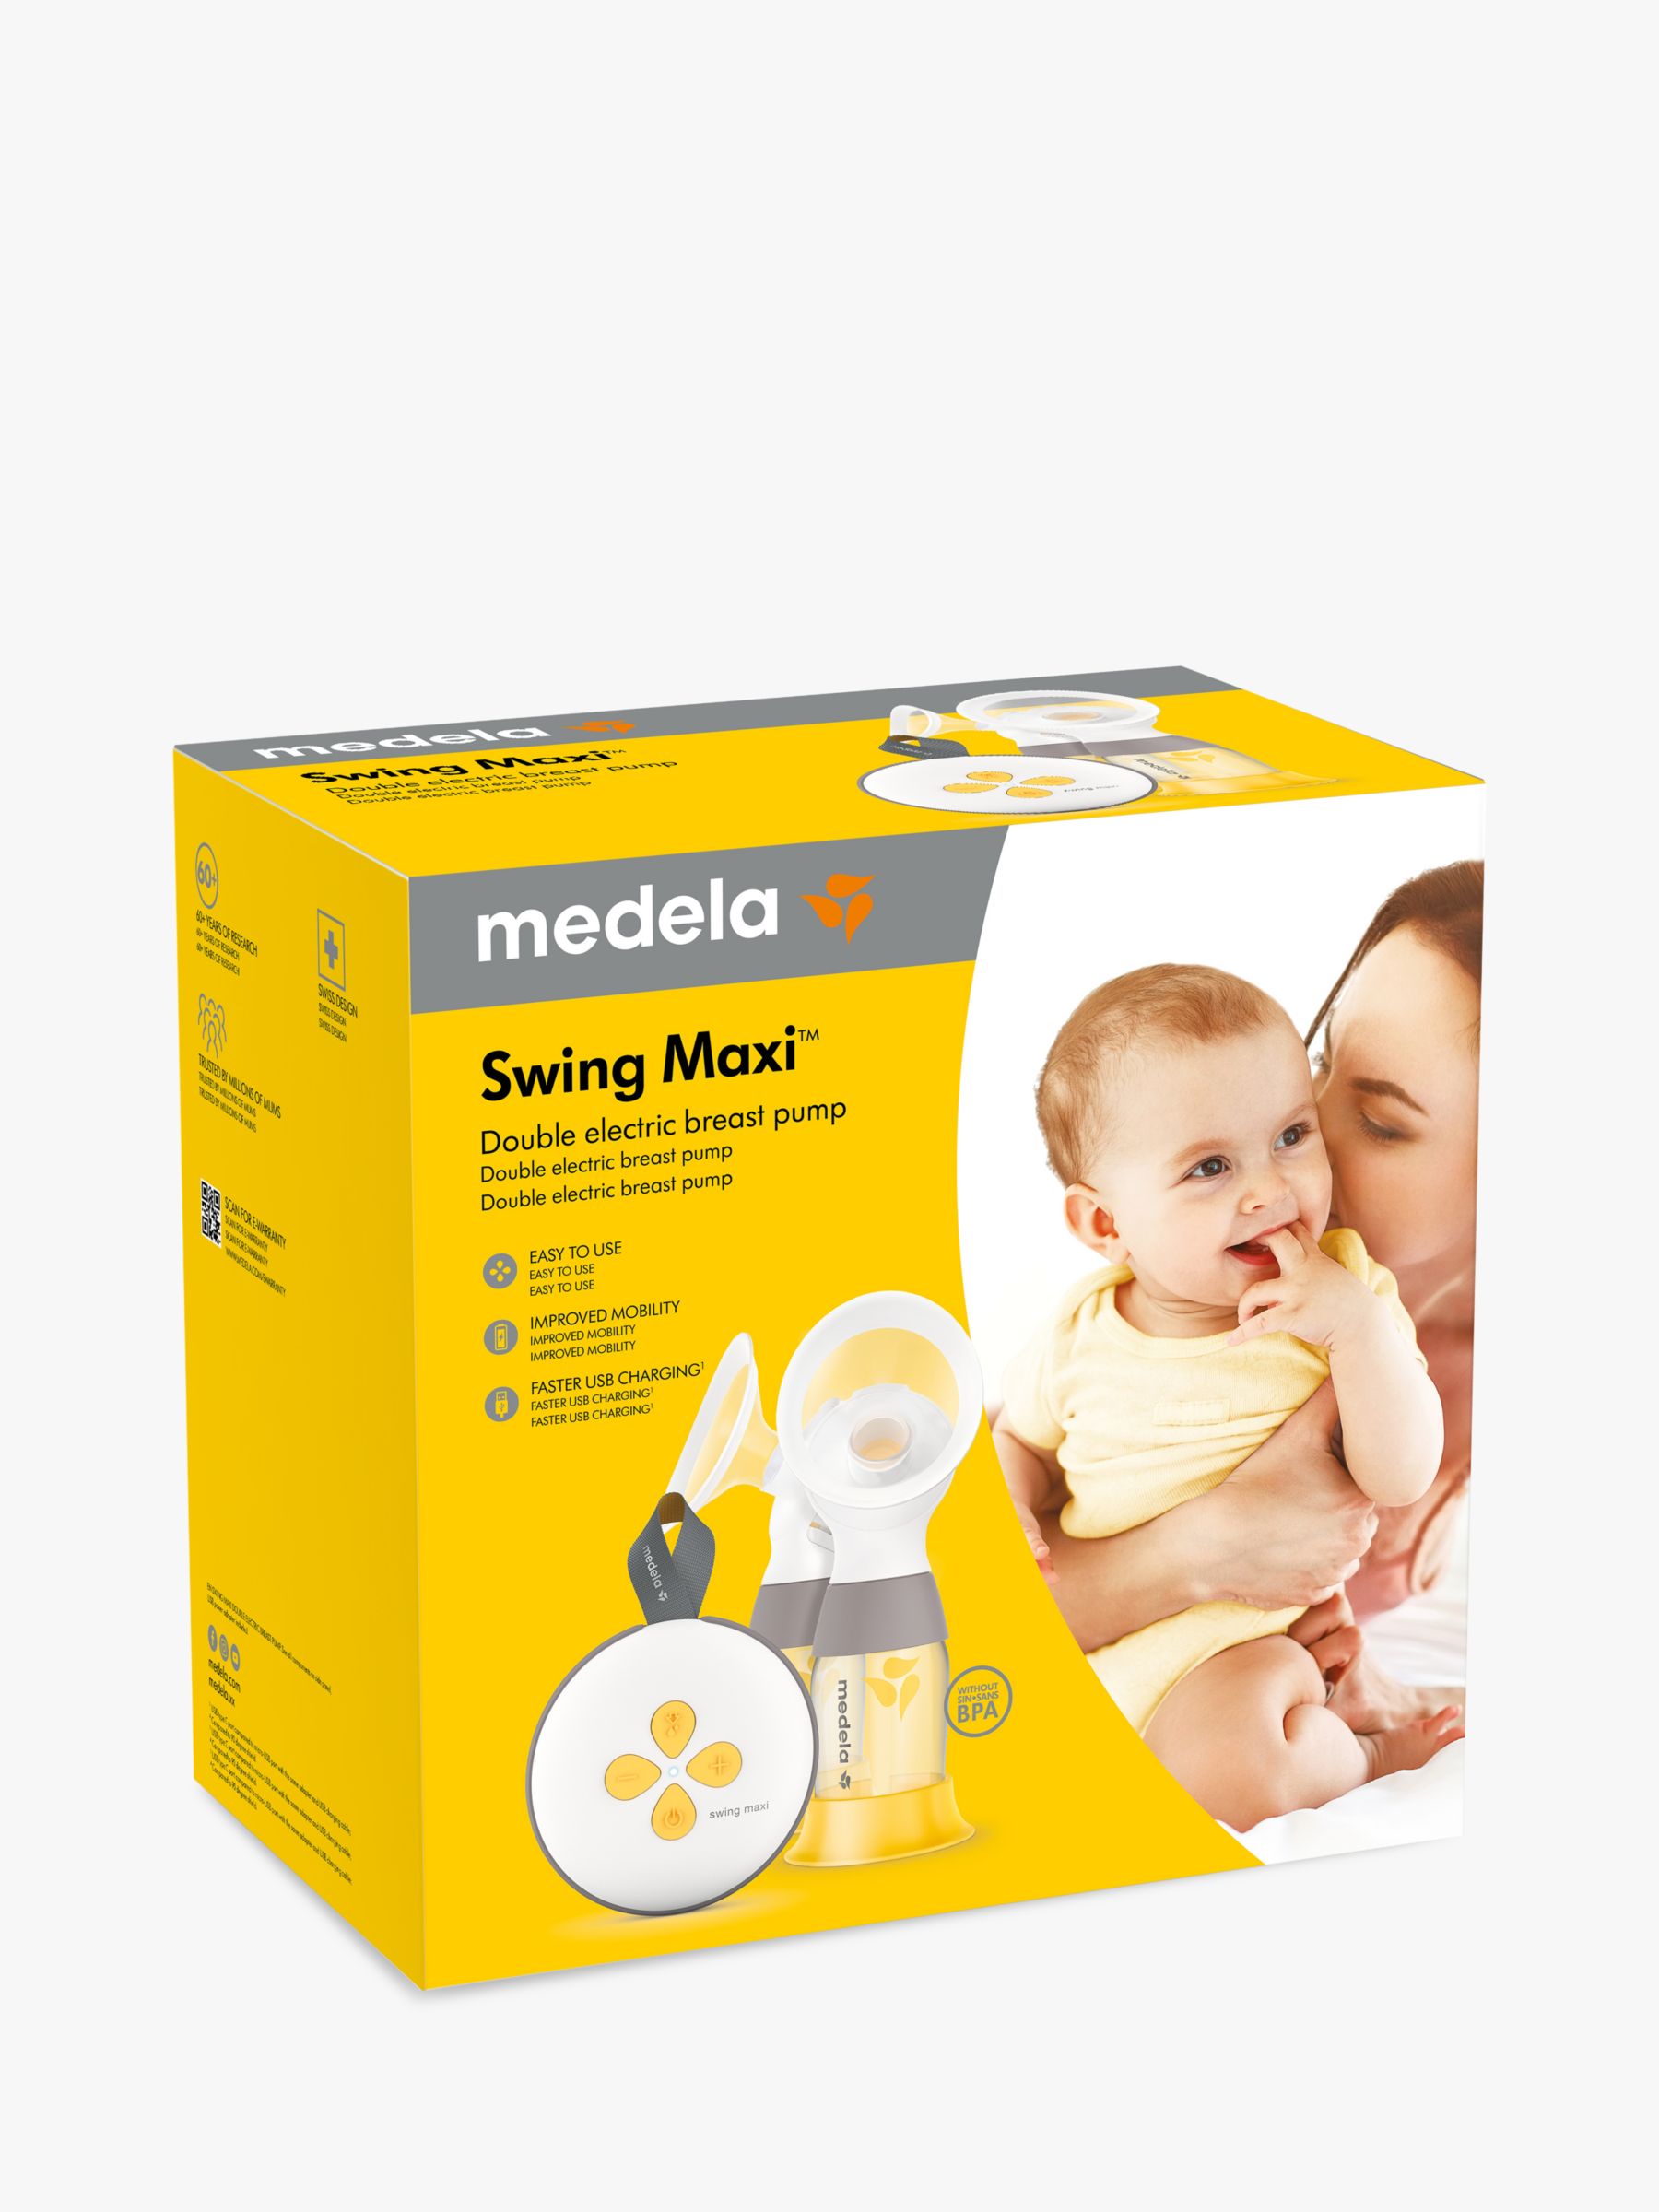 Medela - Swing Maxi Double Electric Breast Pump